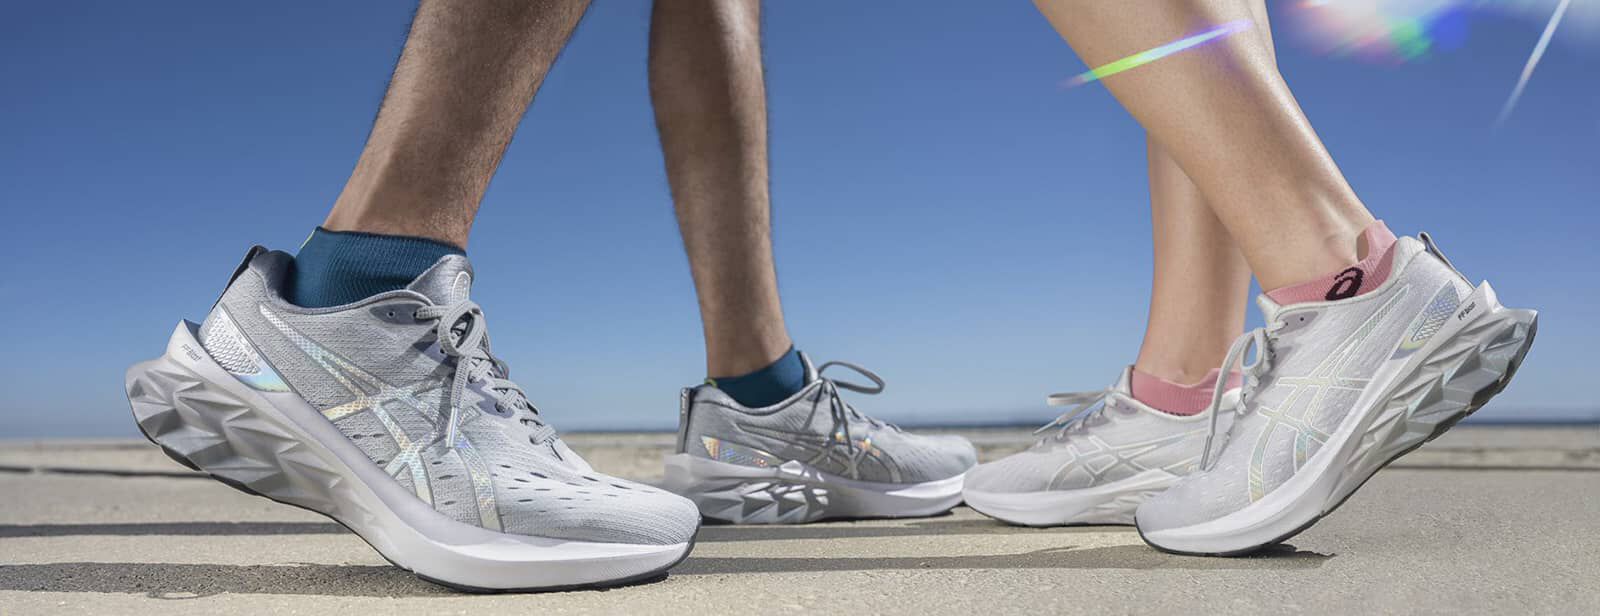 Cómo limpiar tus zapatillas running? | ASICS